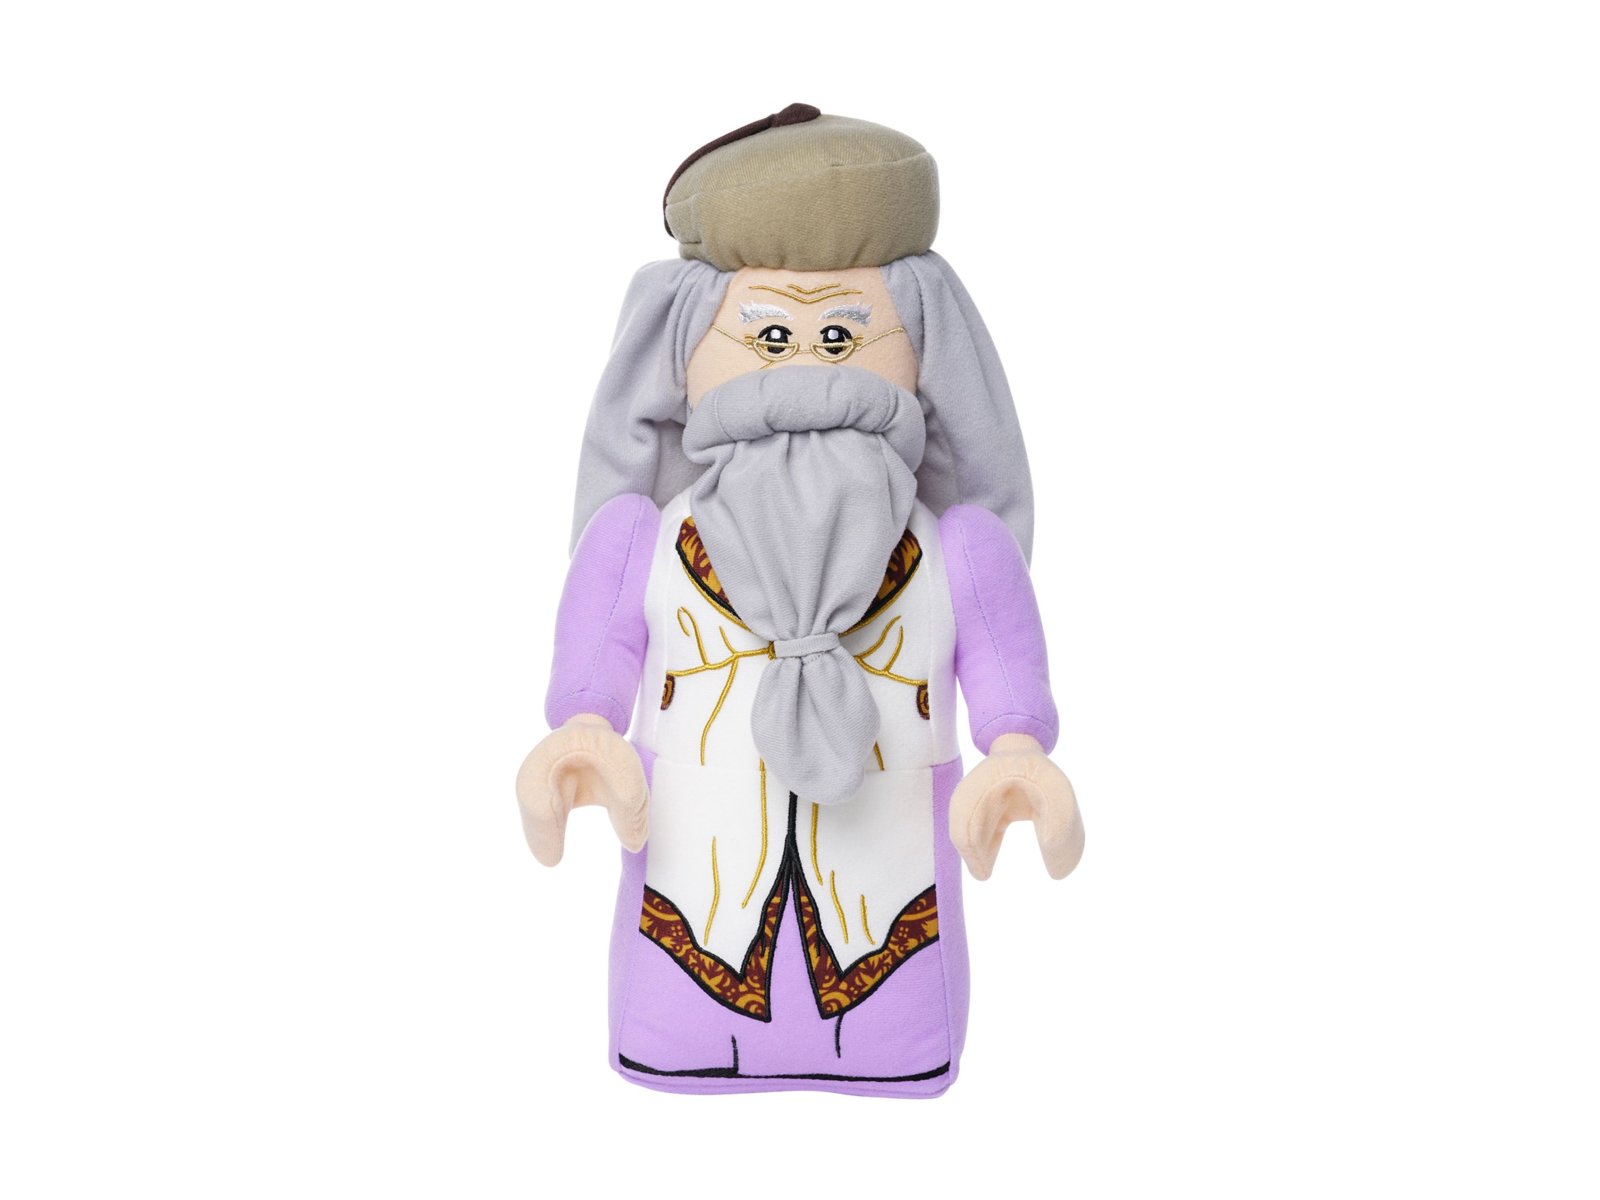 LEGO 5007454 Harry Potter Pluszowy Albus Dumbledore™